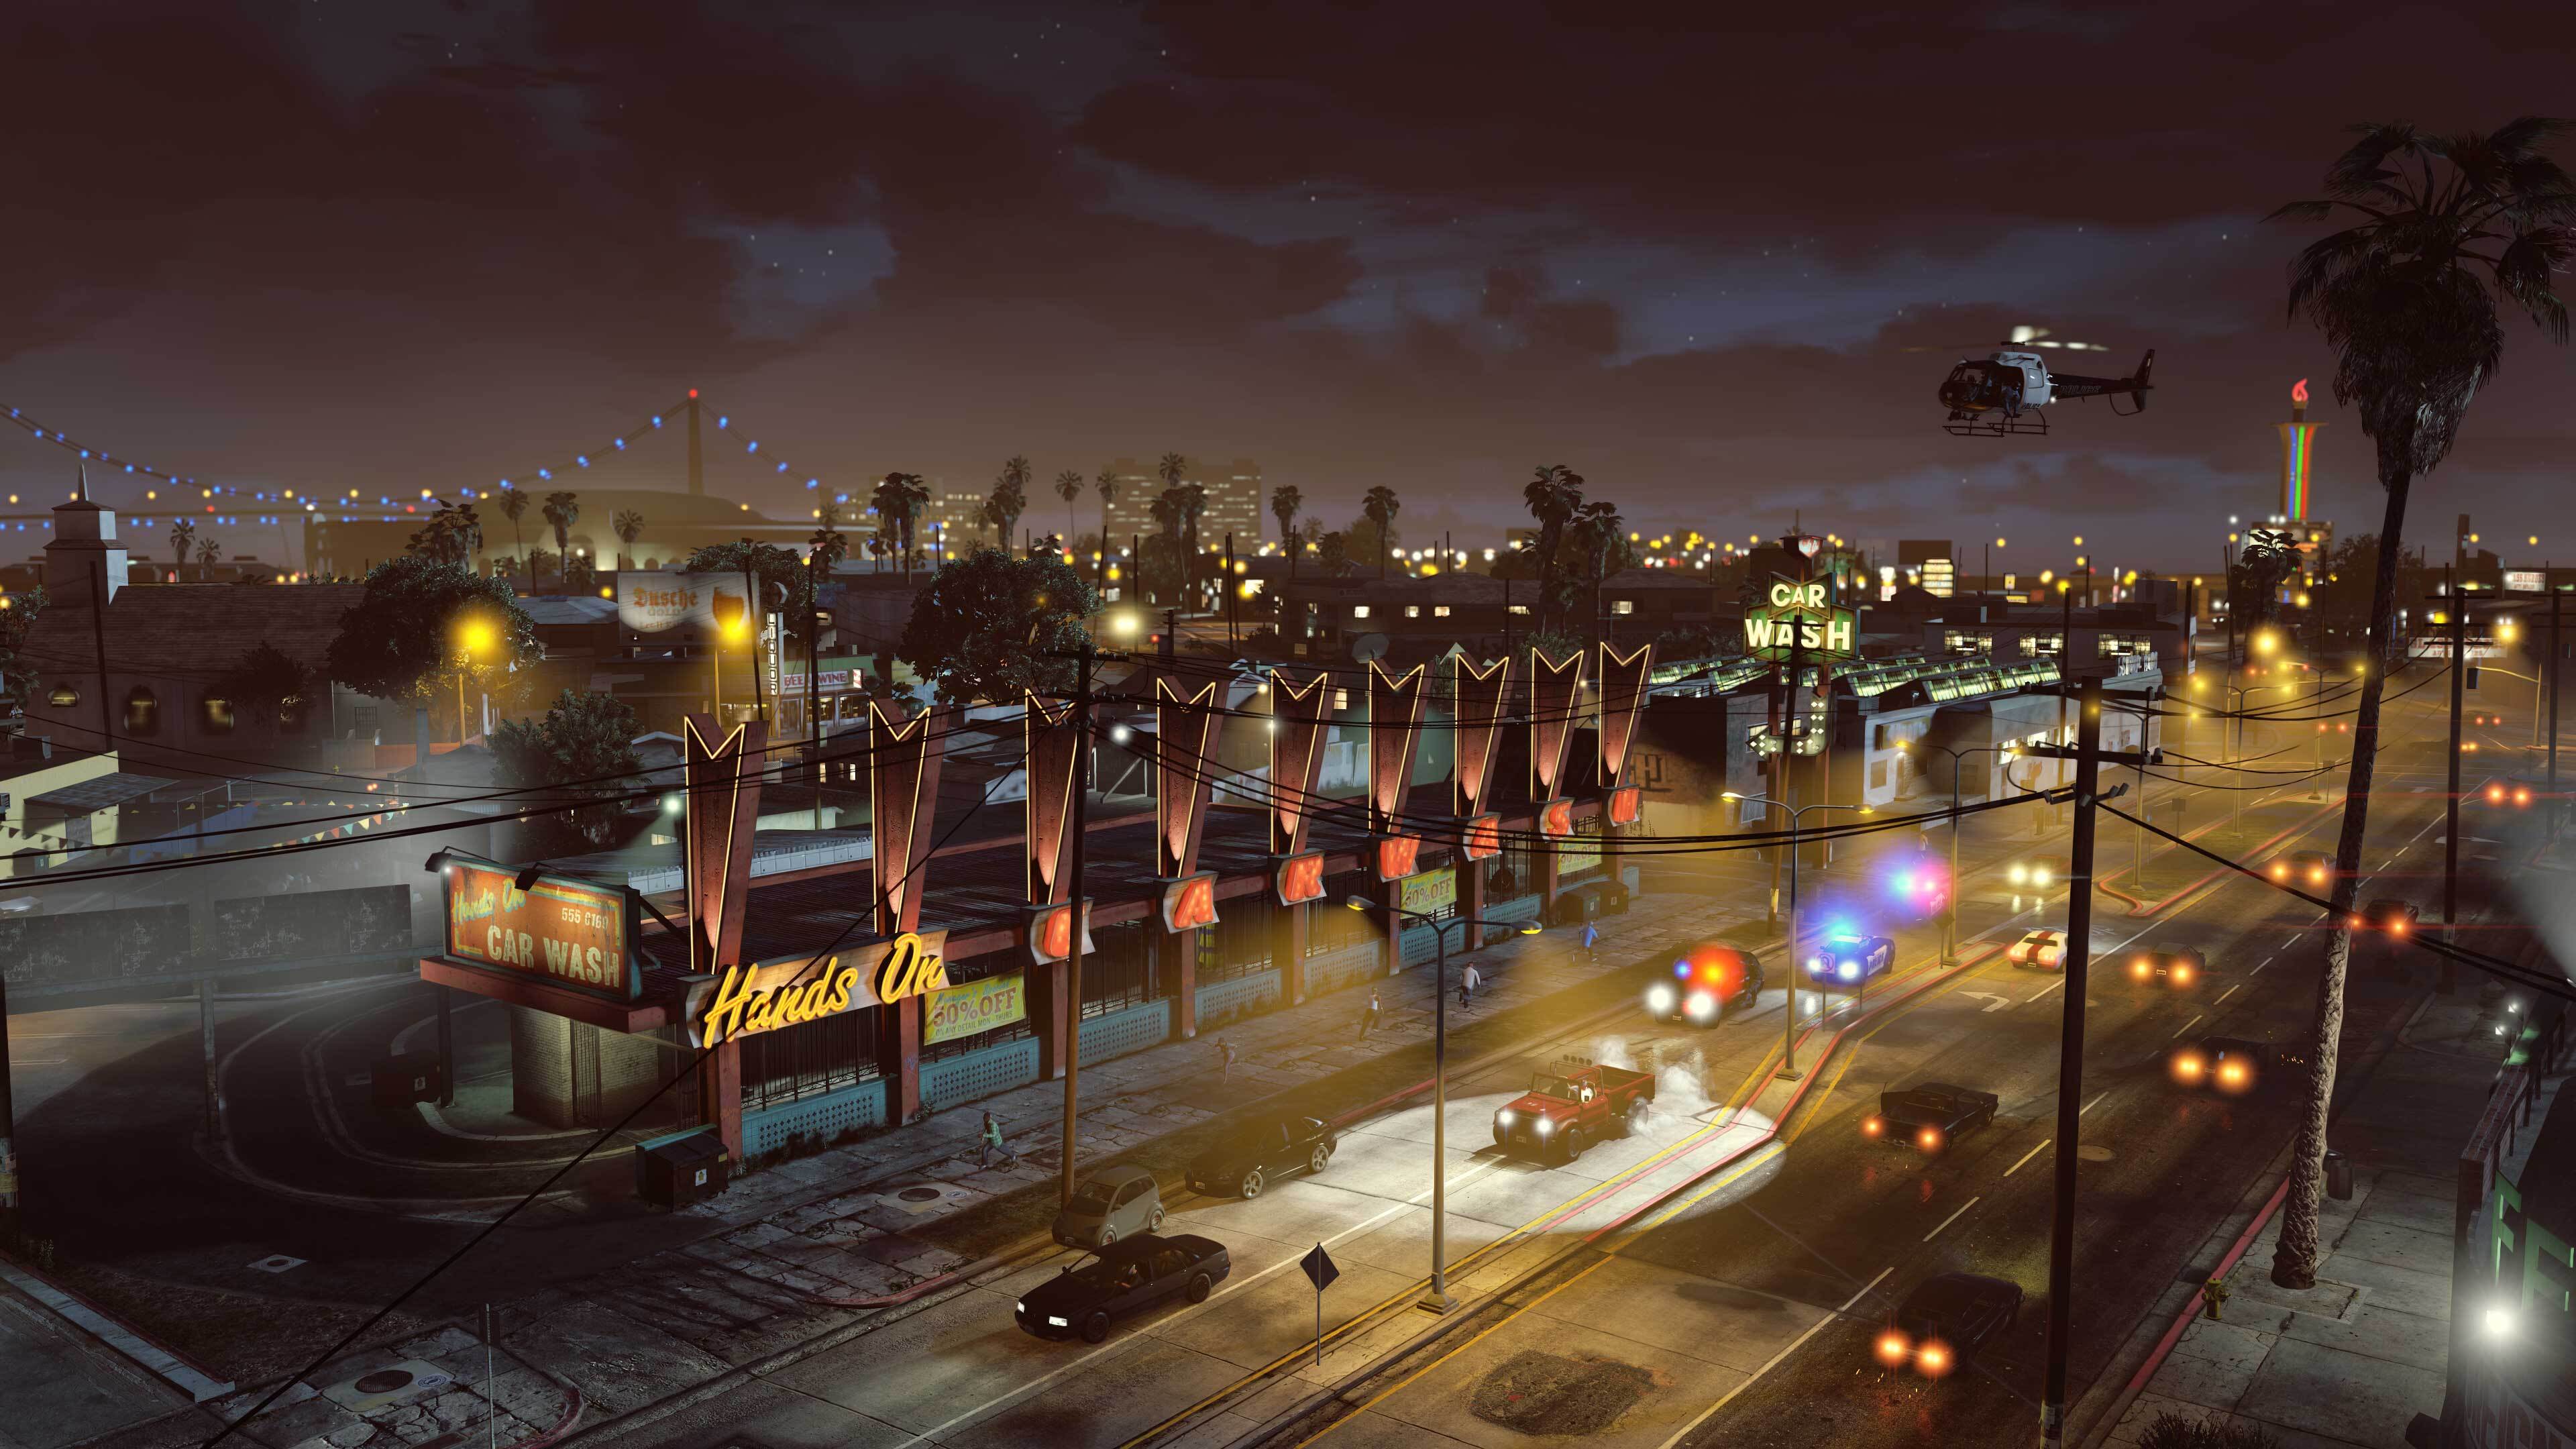 GTA V Grand Theft Auto 5 (Xbox Series X) BRAND NEW